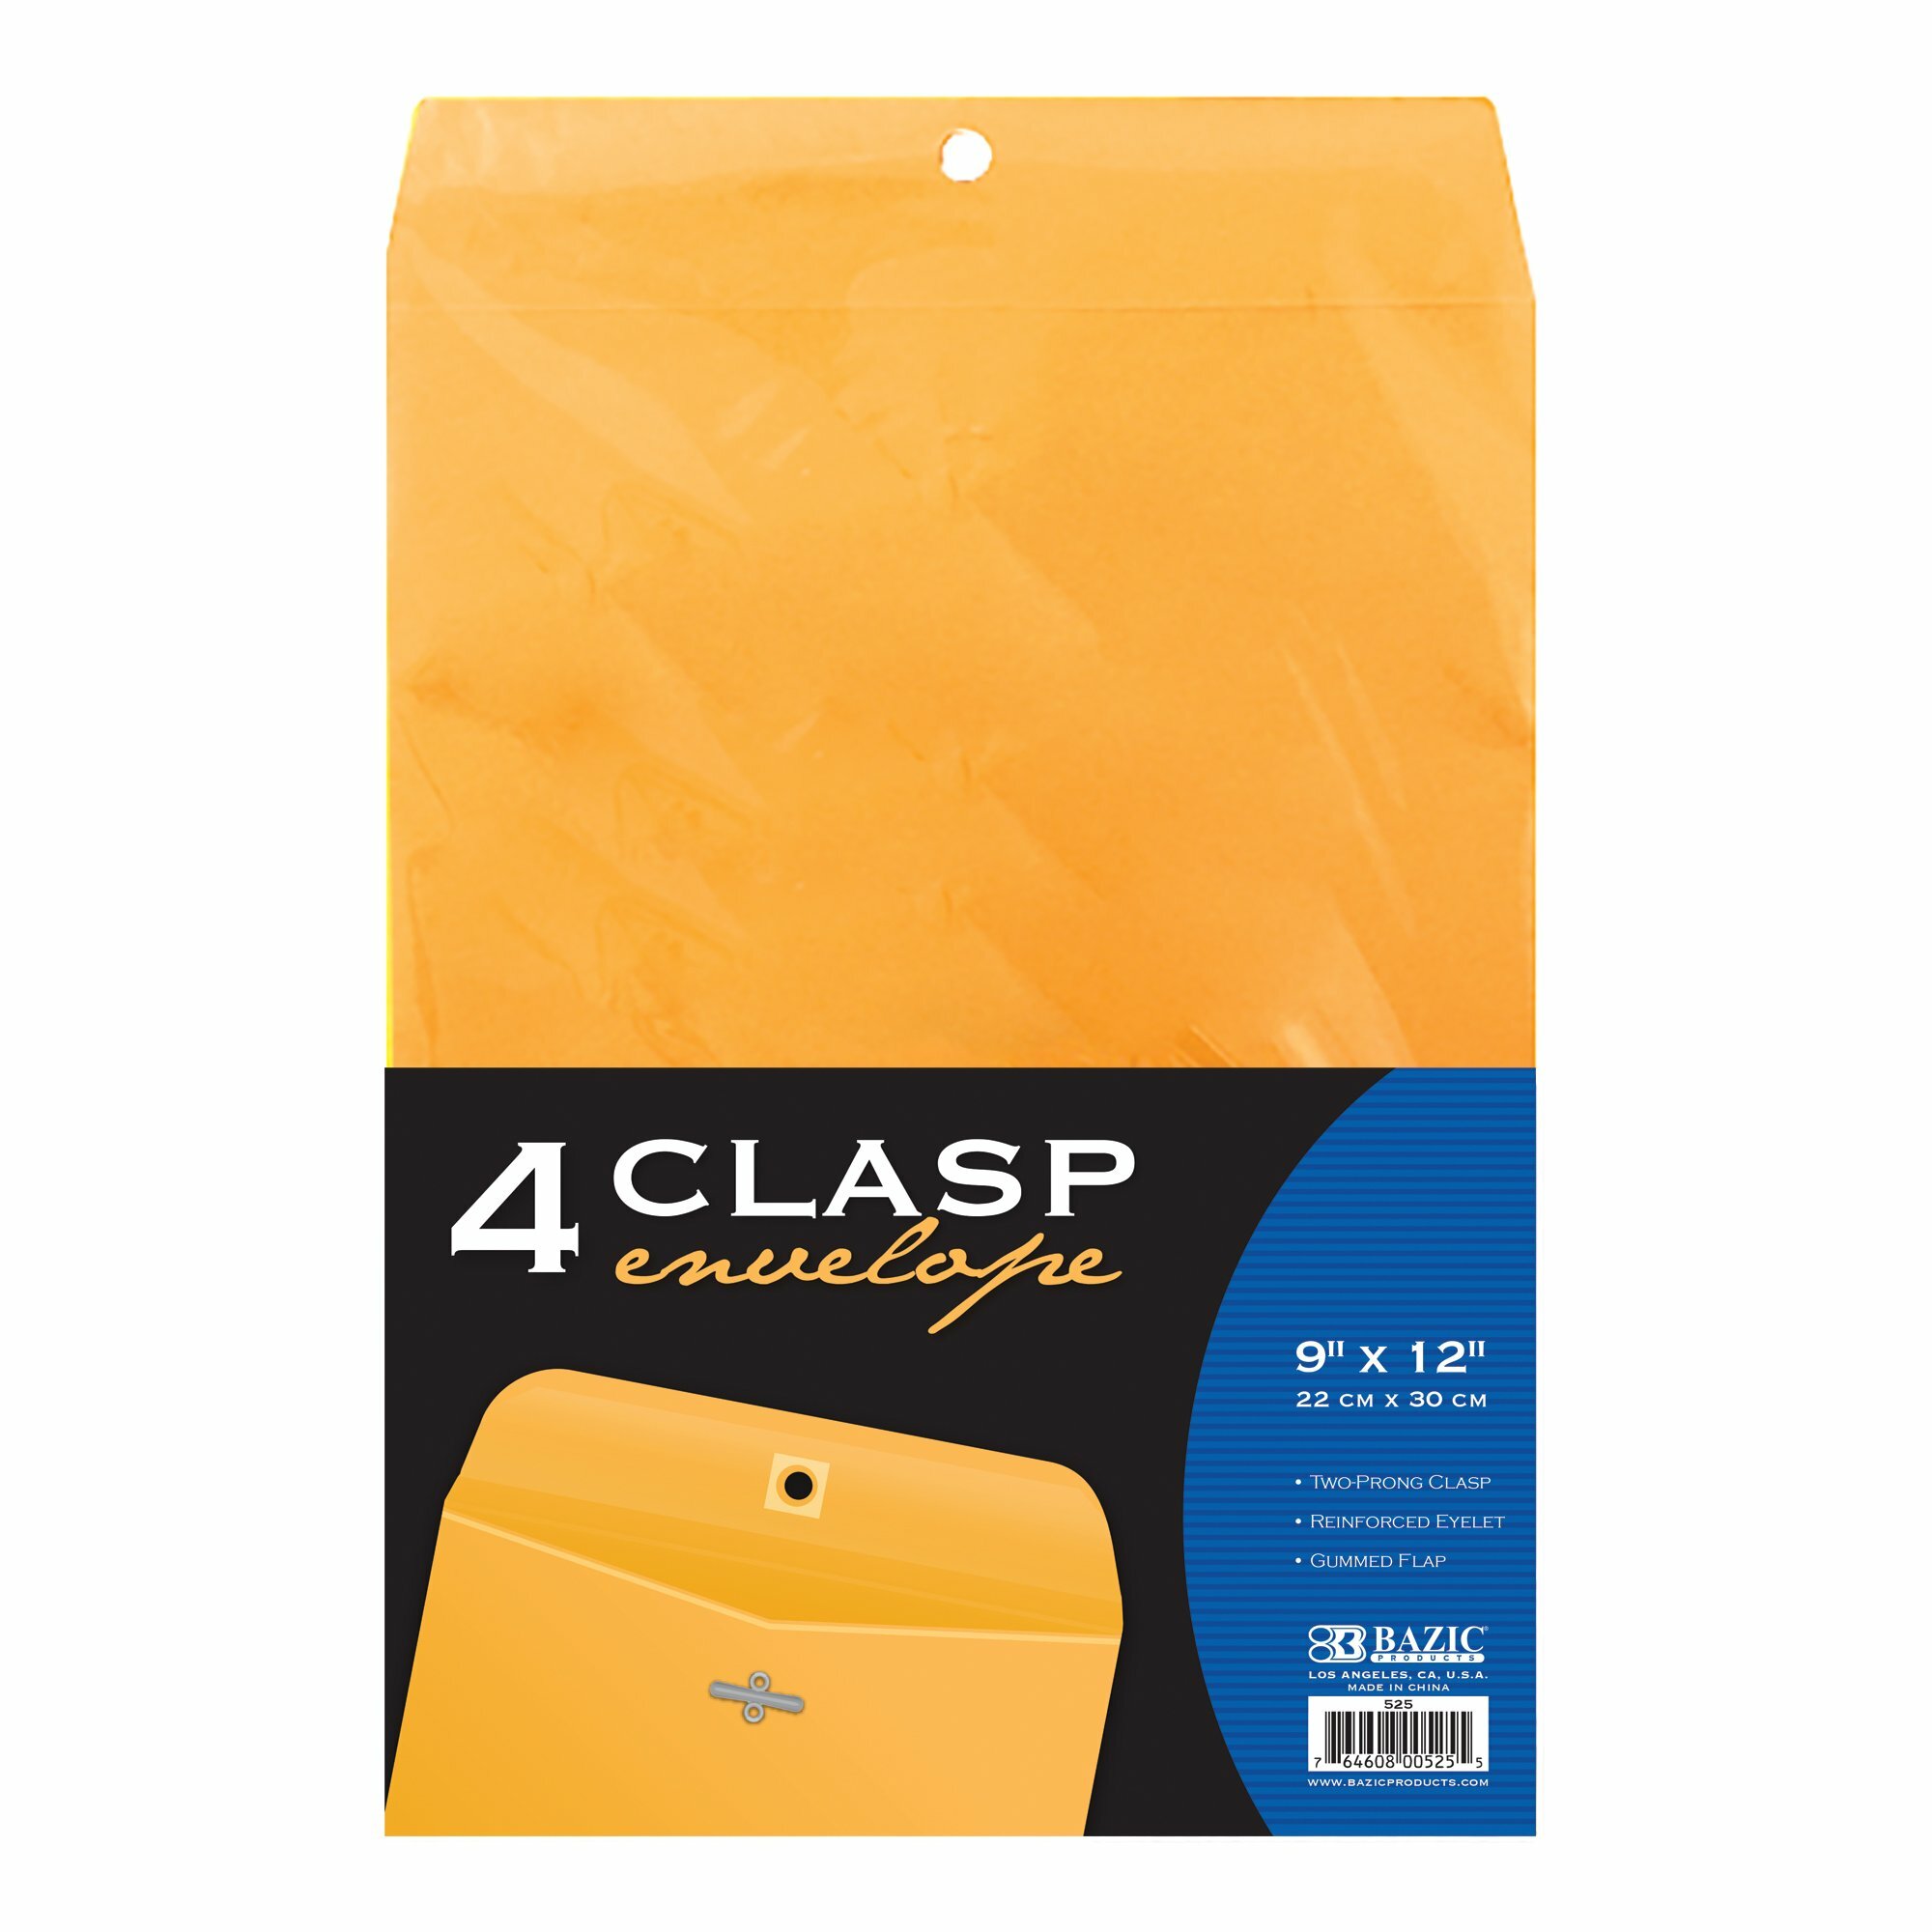 Clasp Envelope Bazic 9x12/4 (IN-6) (525)